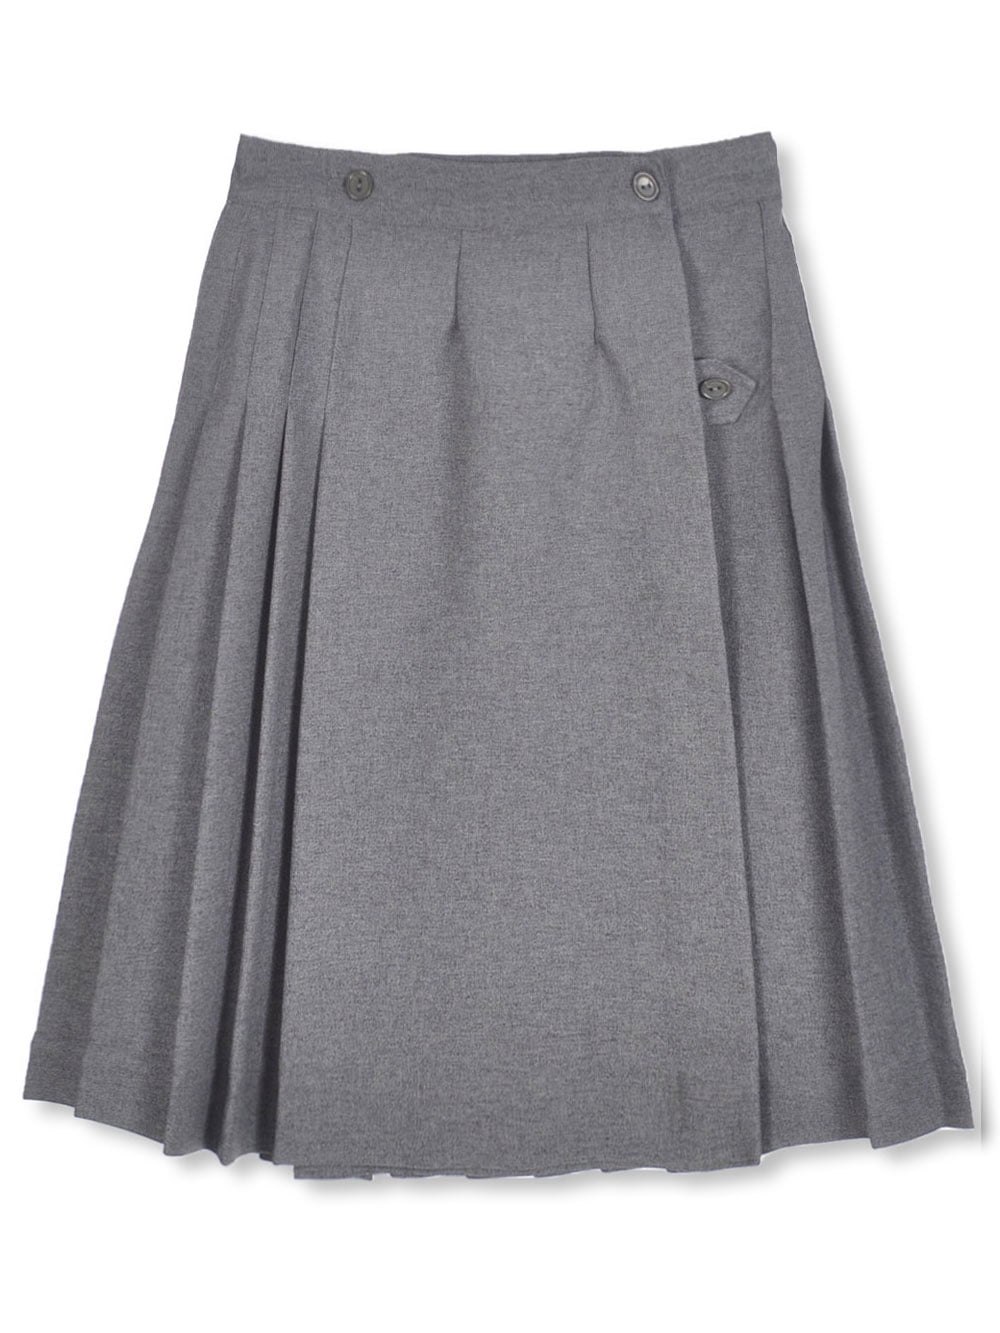 ZECO New Girls Dress Kilt Pleated Polyester Skirt Adjustable School Uniform Wear 